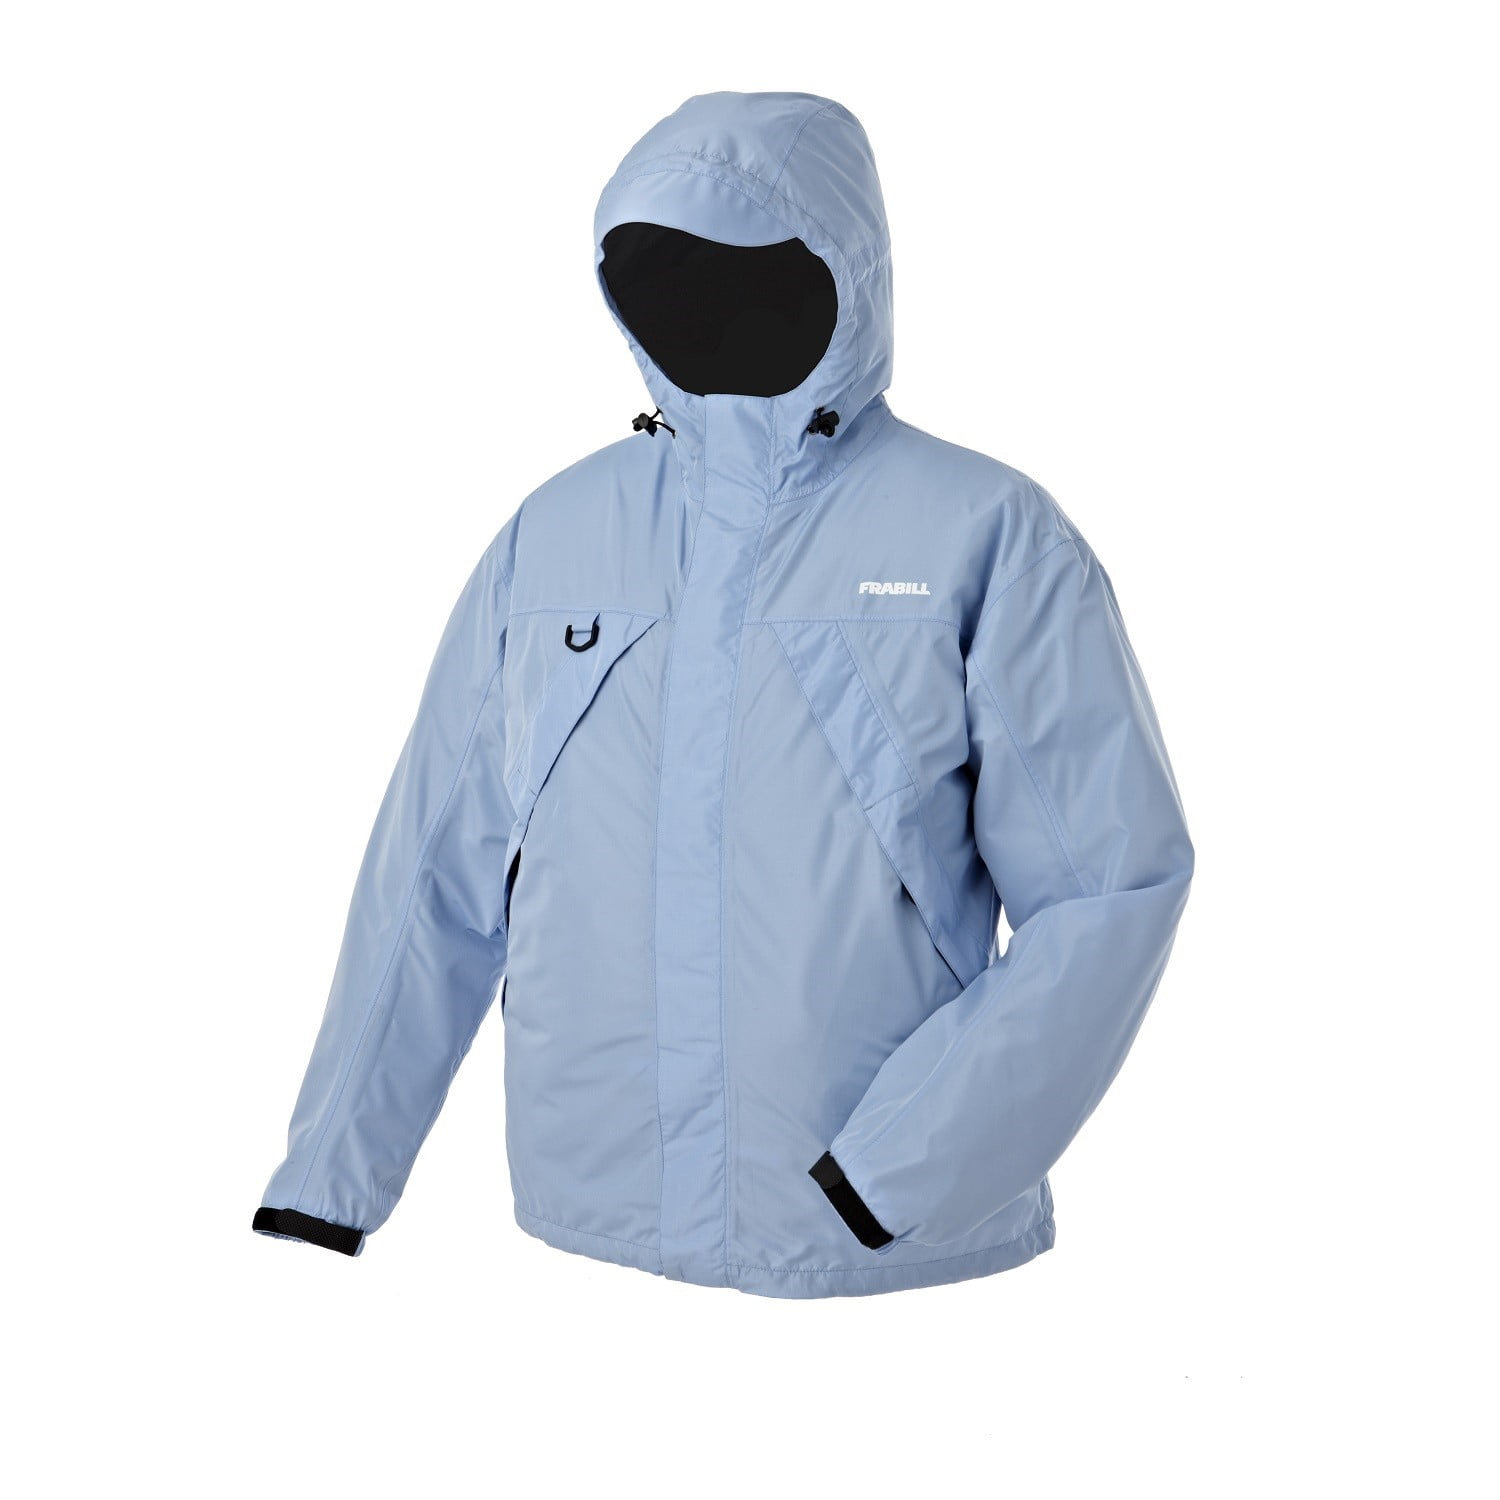 Frabill F1 Rainsuit Jacket Coastal Blue XL - Walmart.com